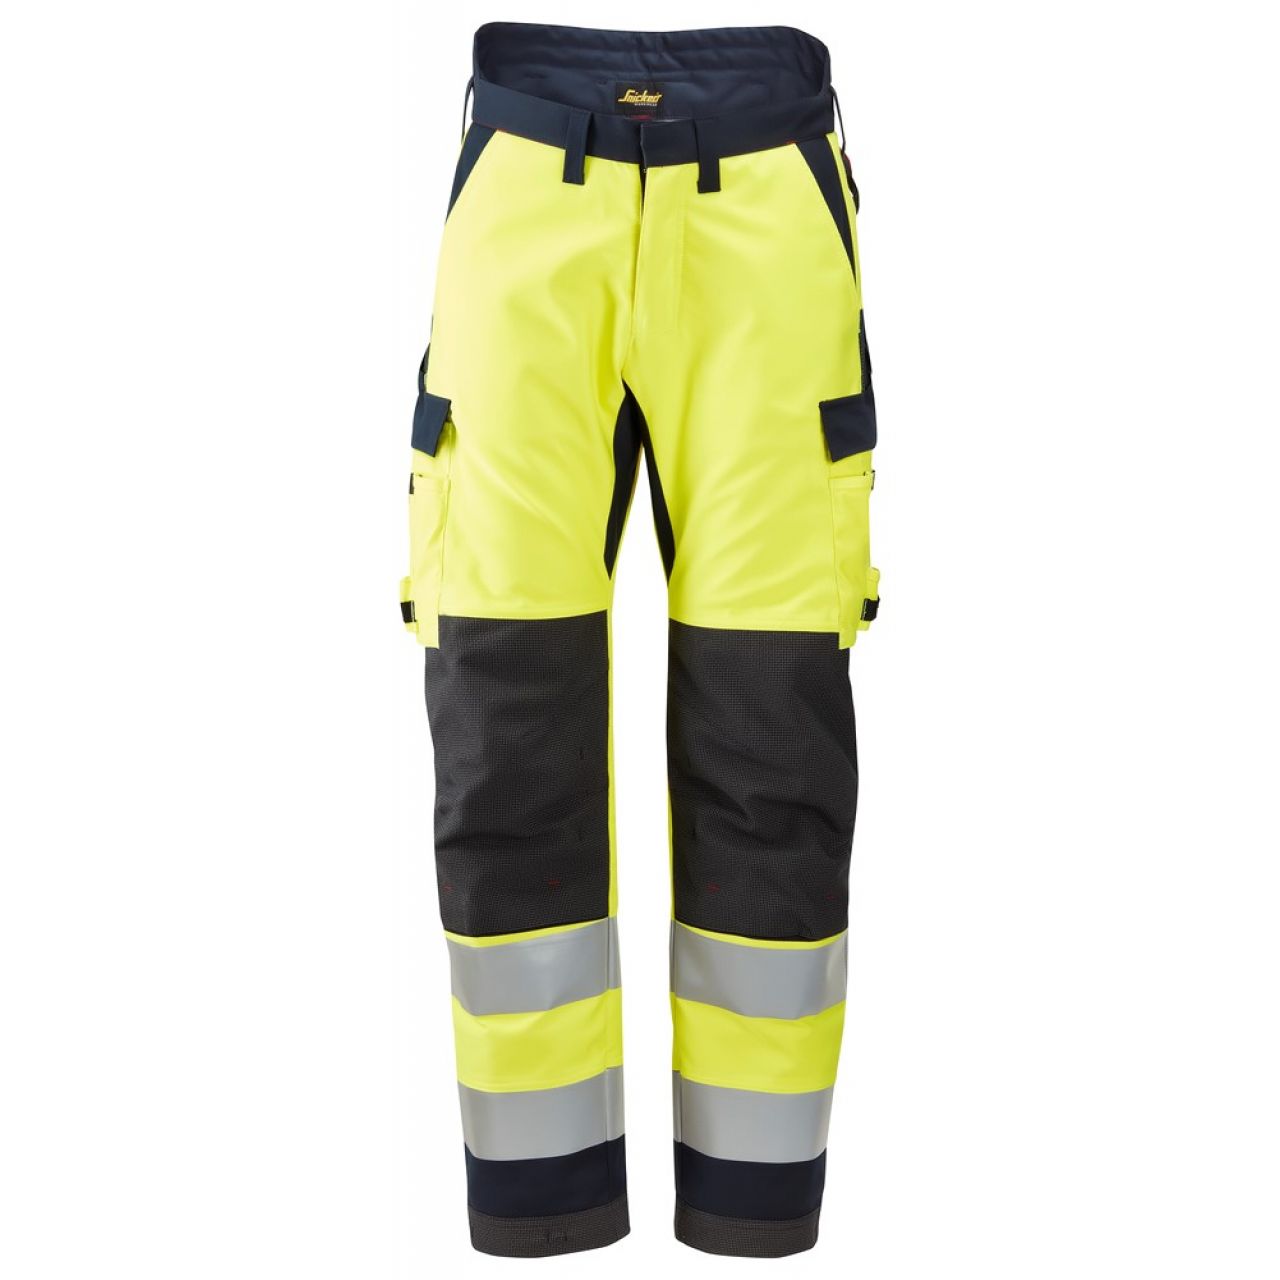 6663 Pantalones largos de trabajo aislantes 37.5® de alta visibiidad clase 2 ProtecWork amarillo-azul marino talla 116